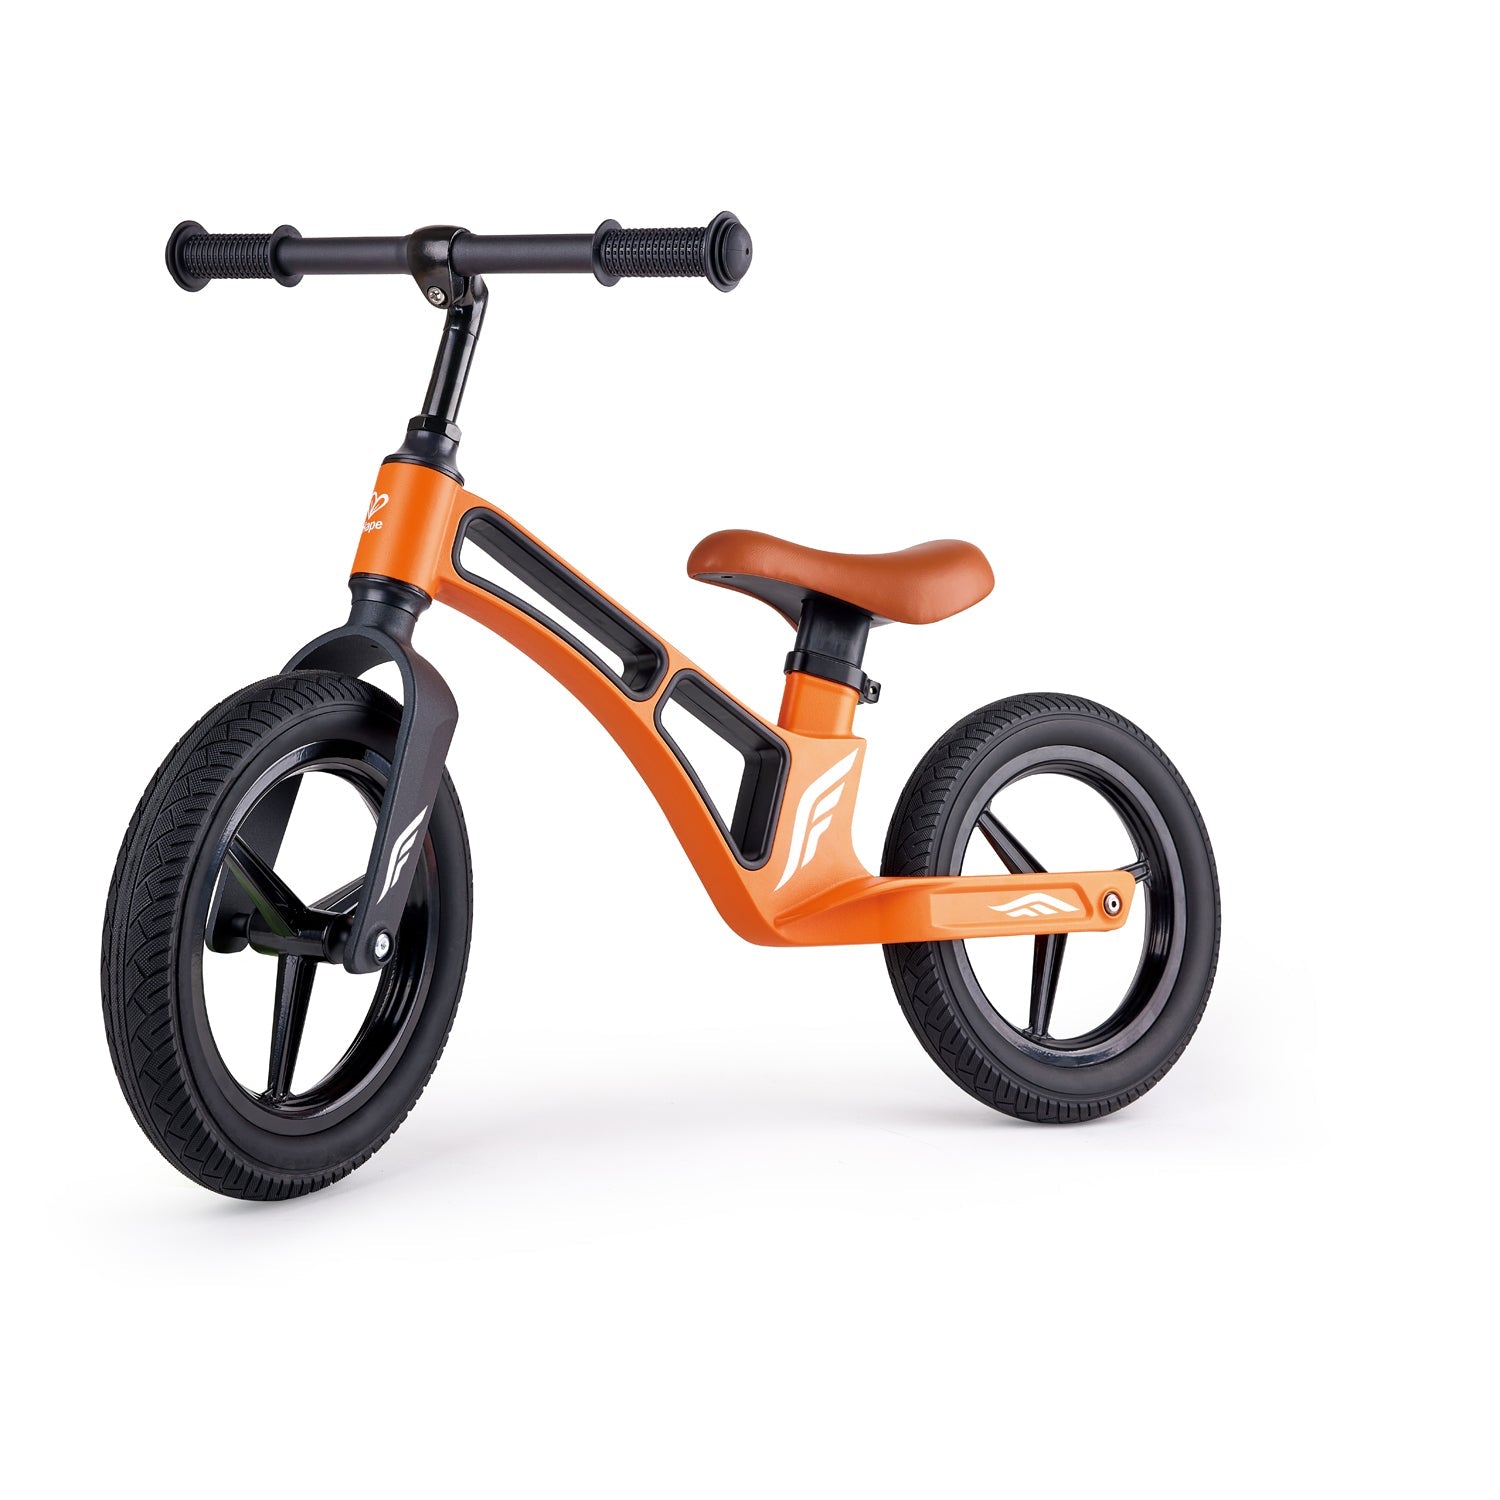 Hape Balance Bike Ultra Light Magnesium Frame for Kids 3 to 5 Years,12" Flat Free PU Tires, Adjustable Handlebar and Seat No Pedal Kids Bicycle